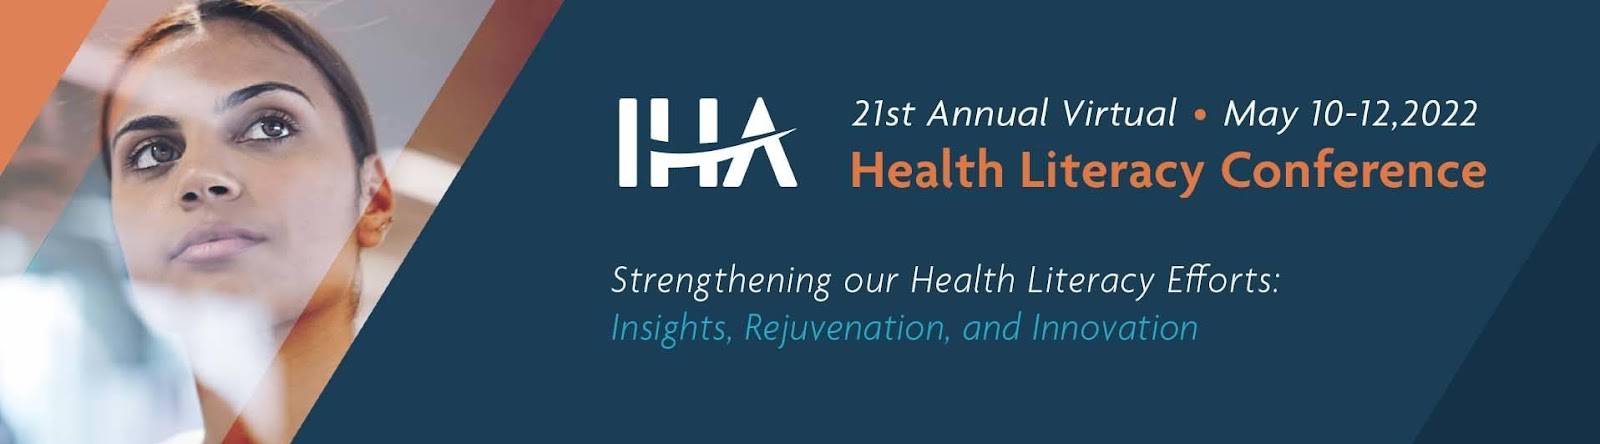 IHA's 21st Annual Virtual Health Literacy Conference